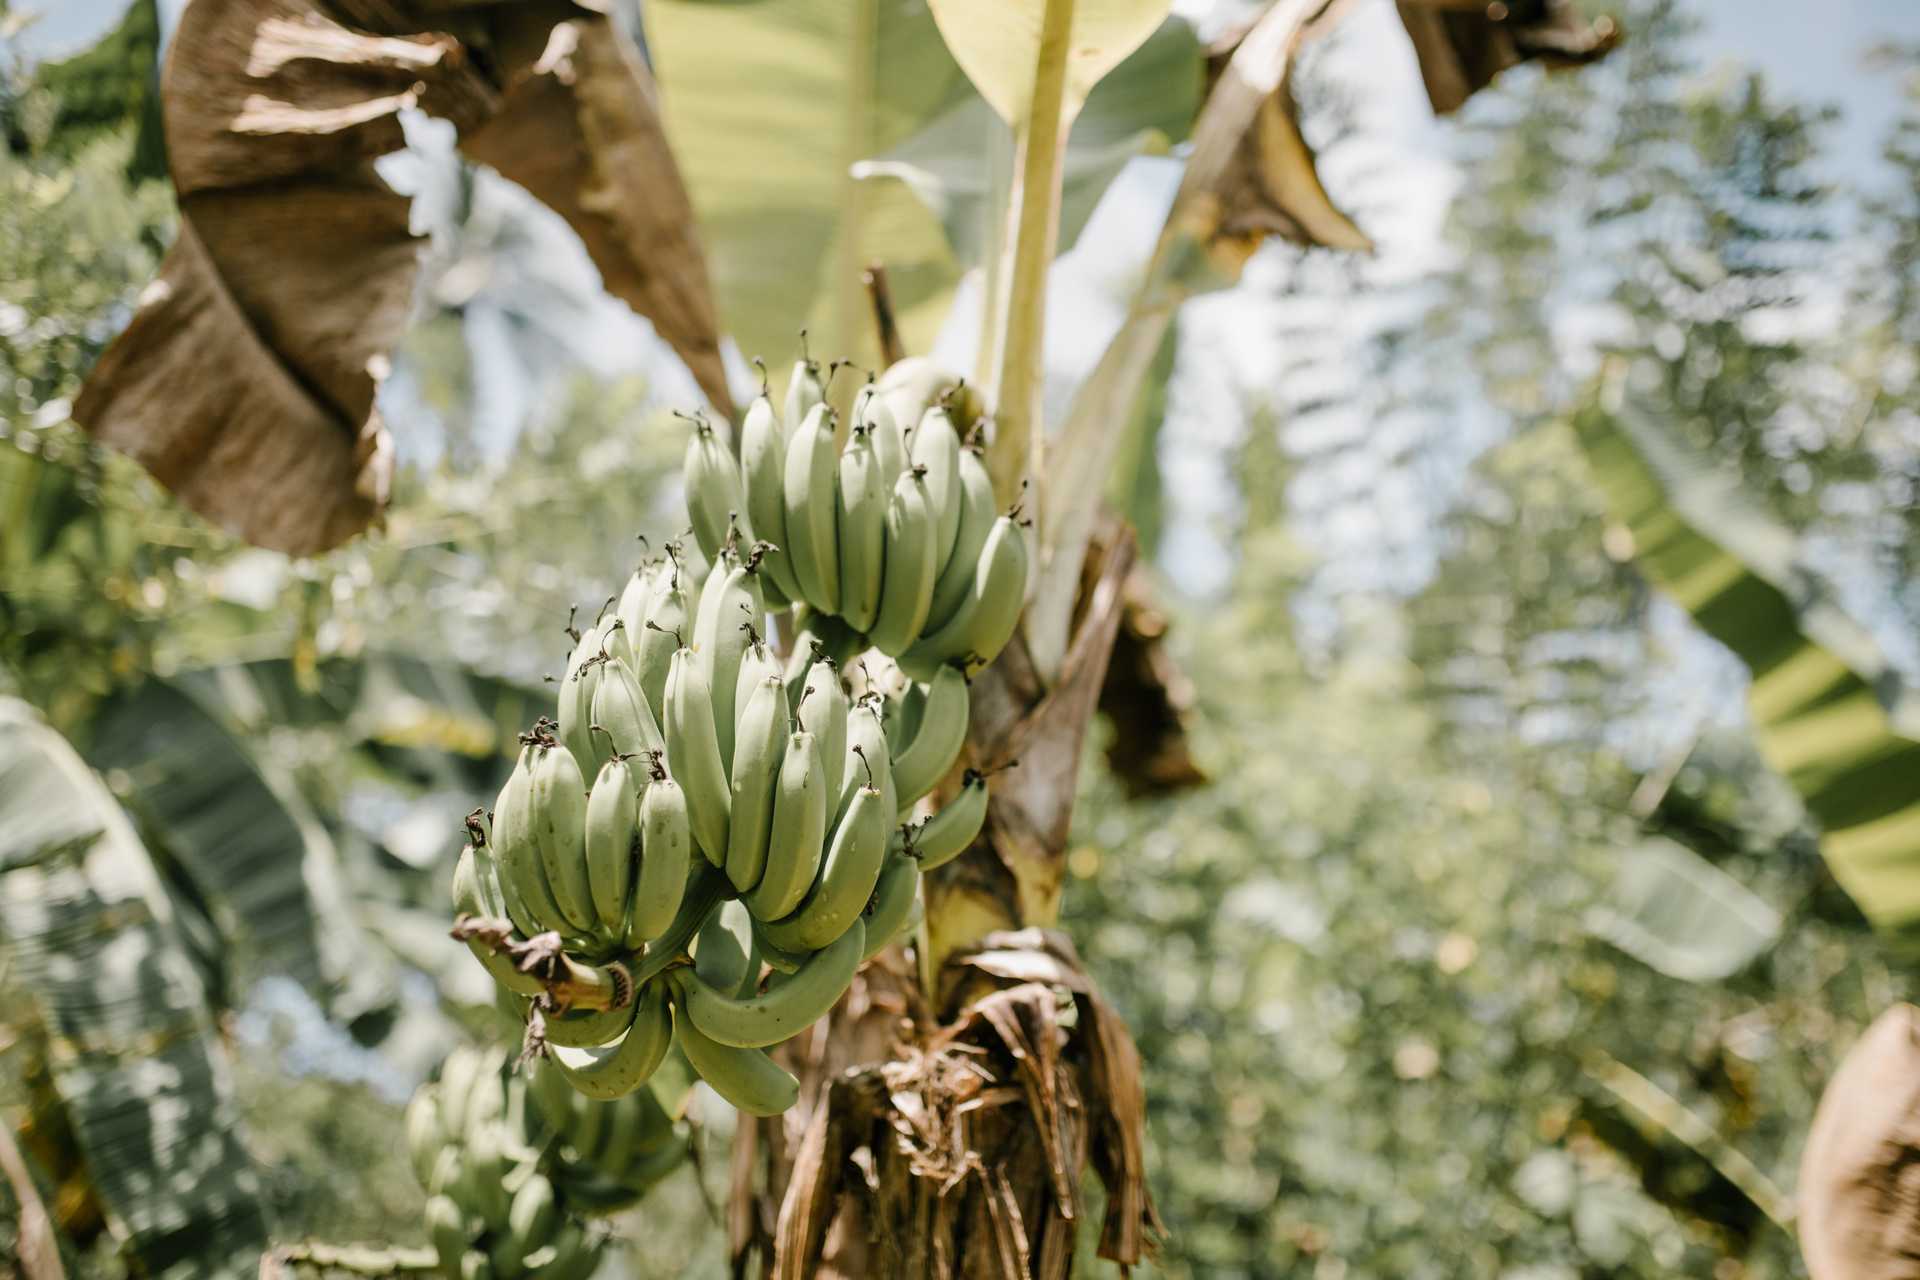 Bananas growing in lush garden